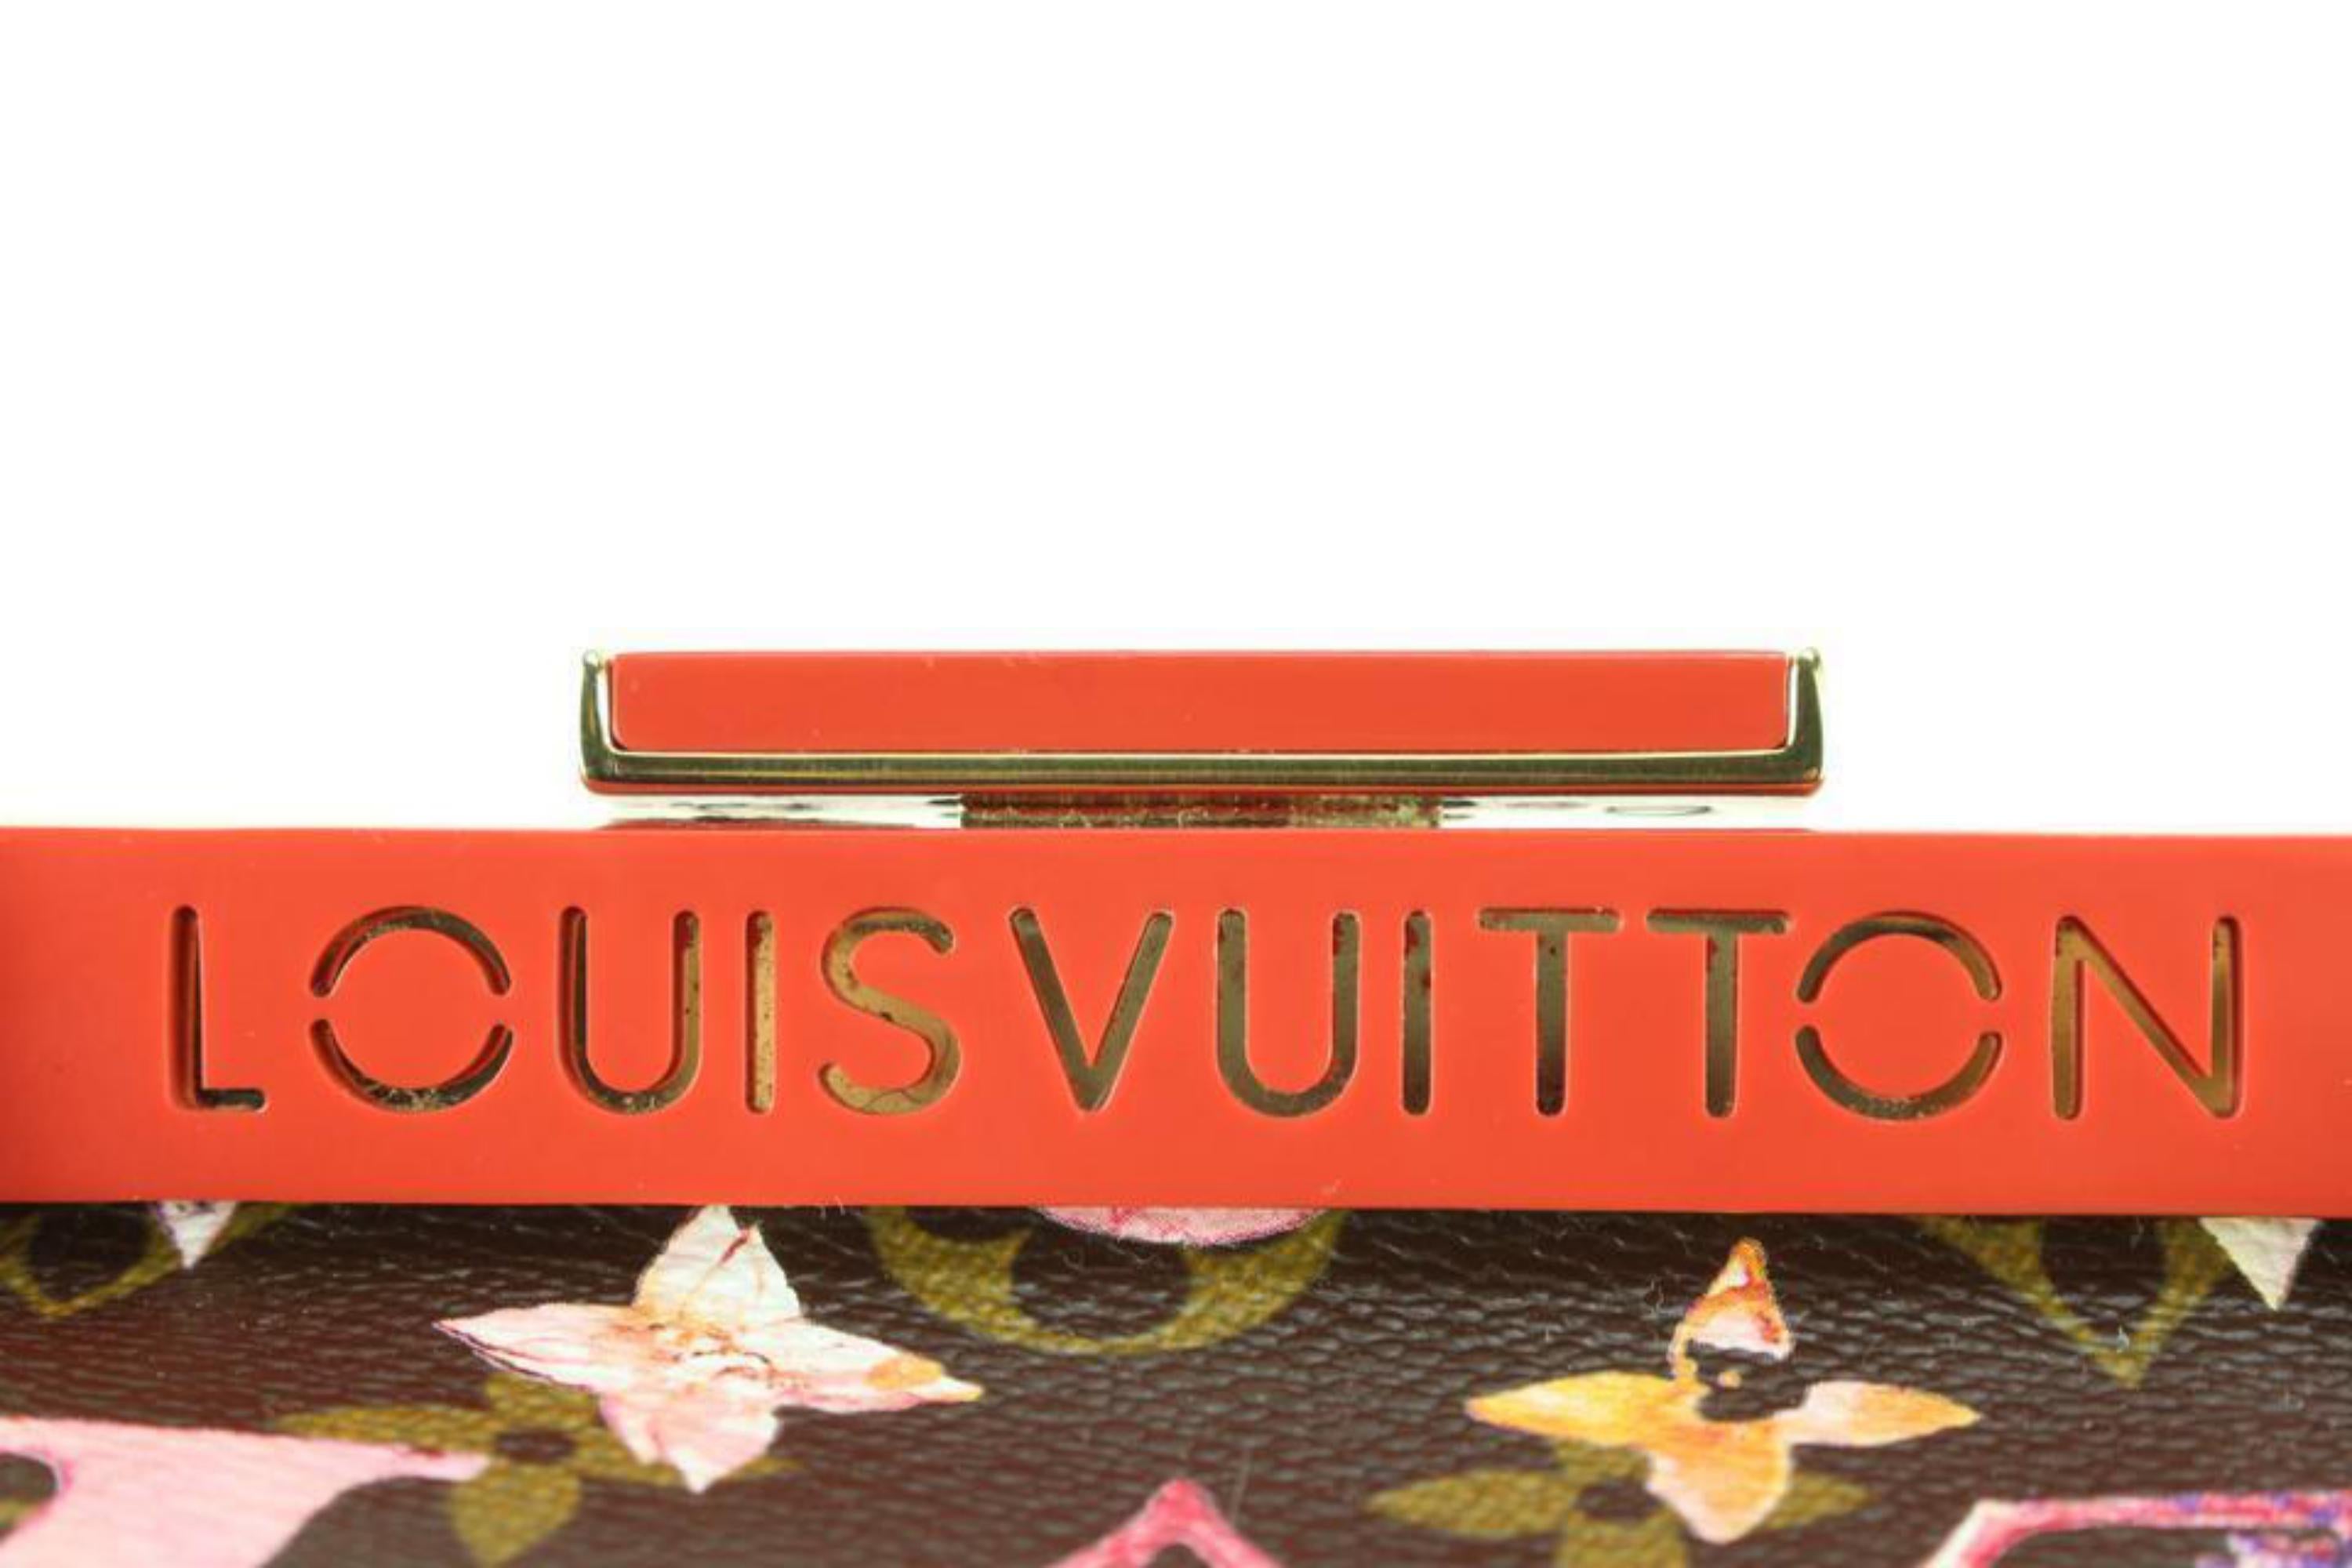 Watercolor Louis Vuitton shopping bag Louis Vuitton orange bag